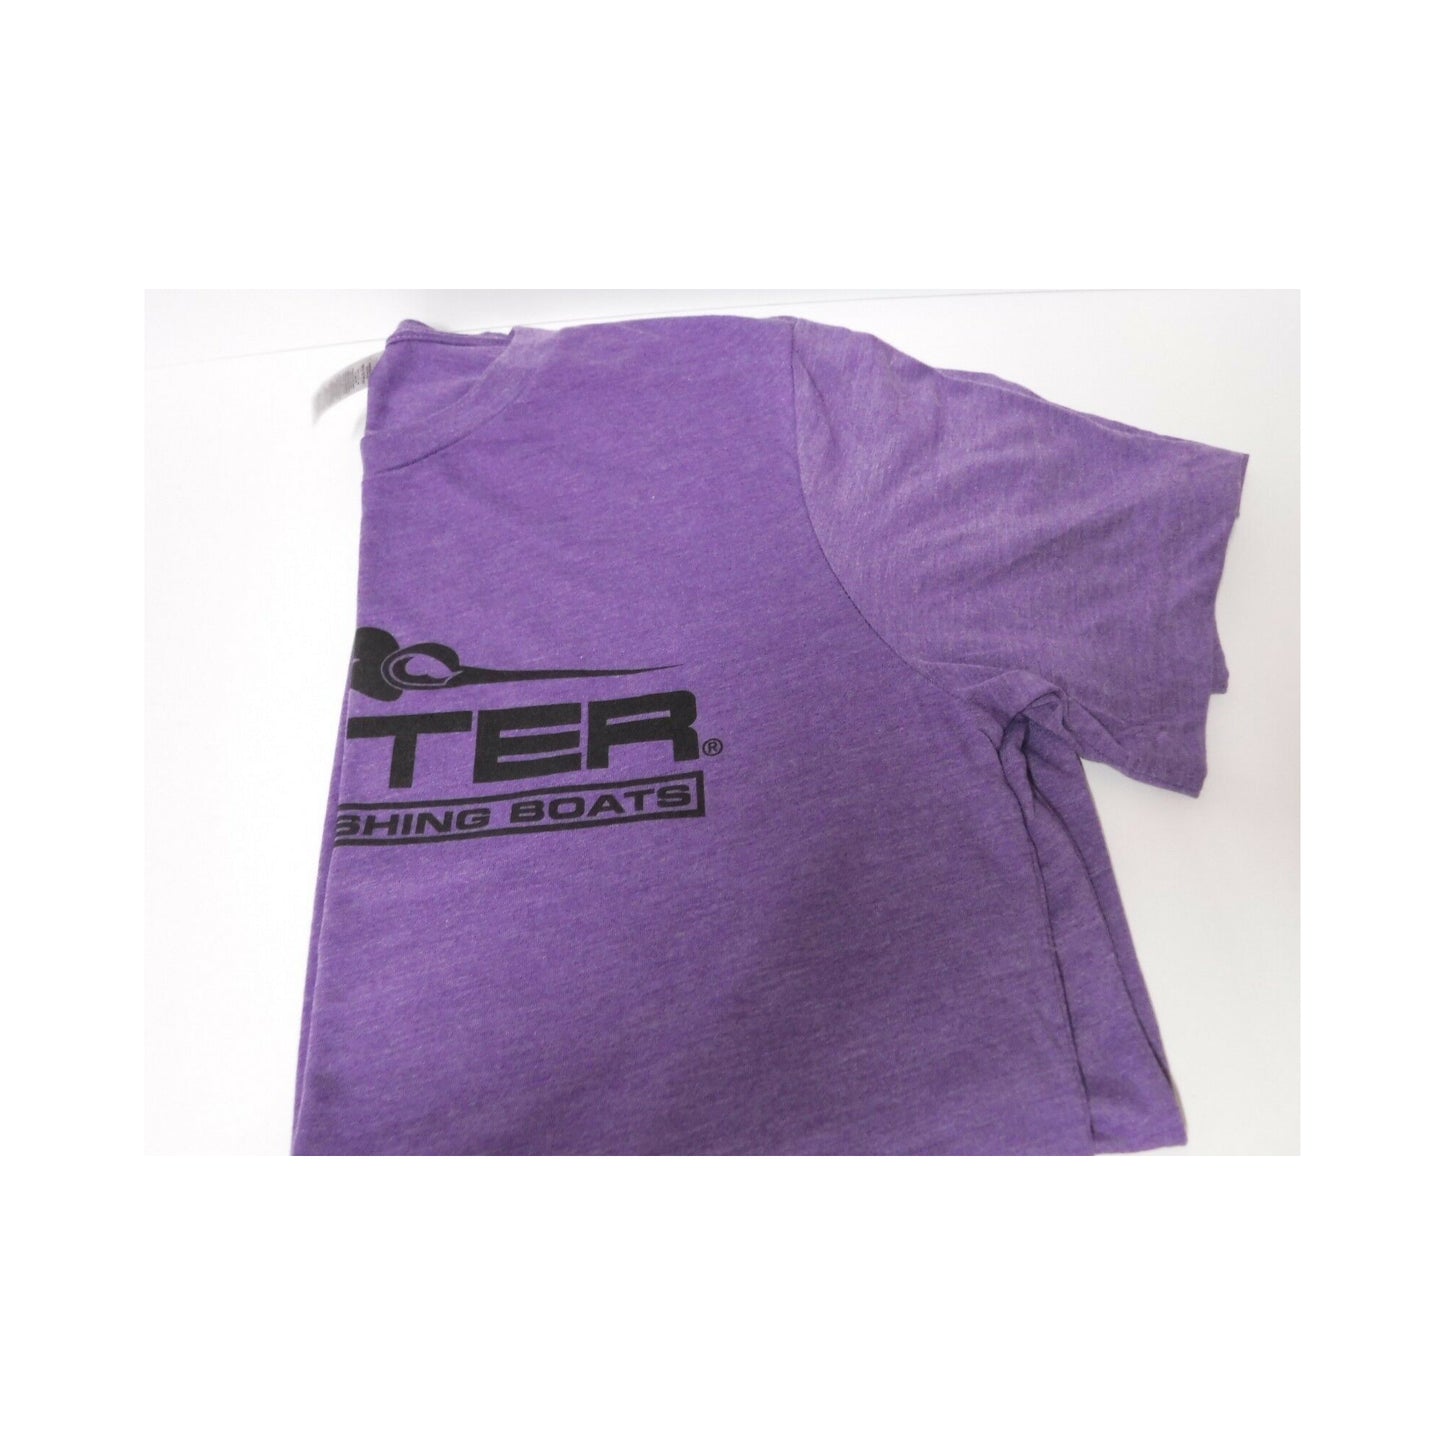 New Authentic Skeeter-Softstyle T-Shirt-Heather Purple/Eat, Sleep, Fish Small